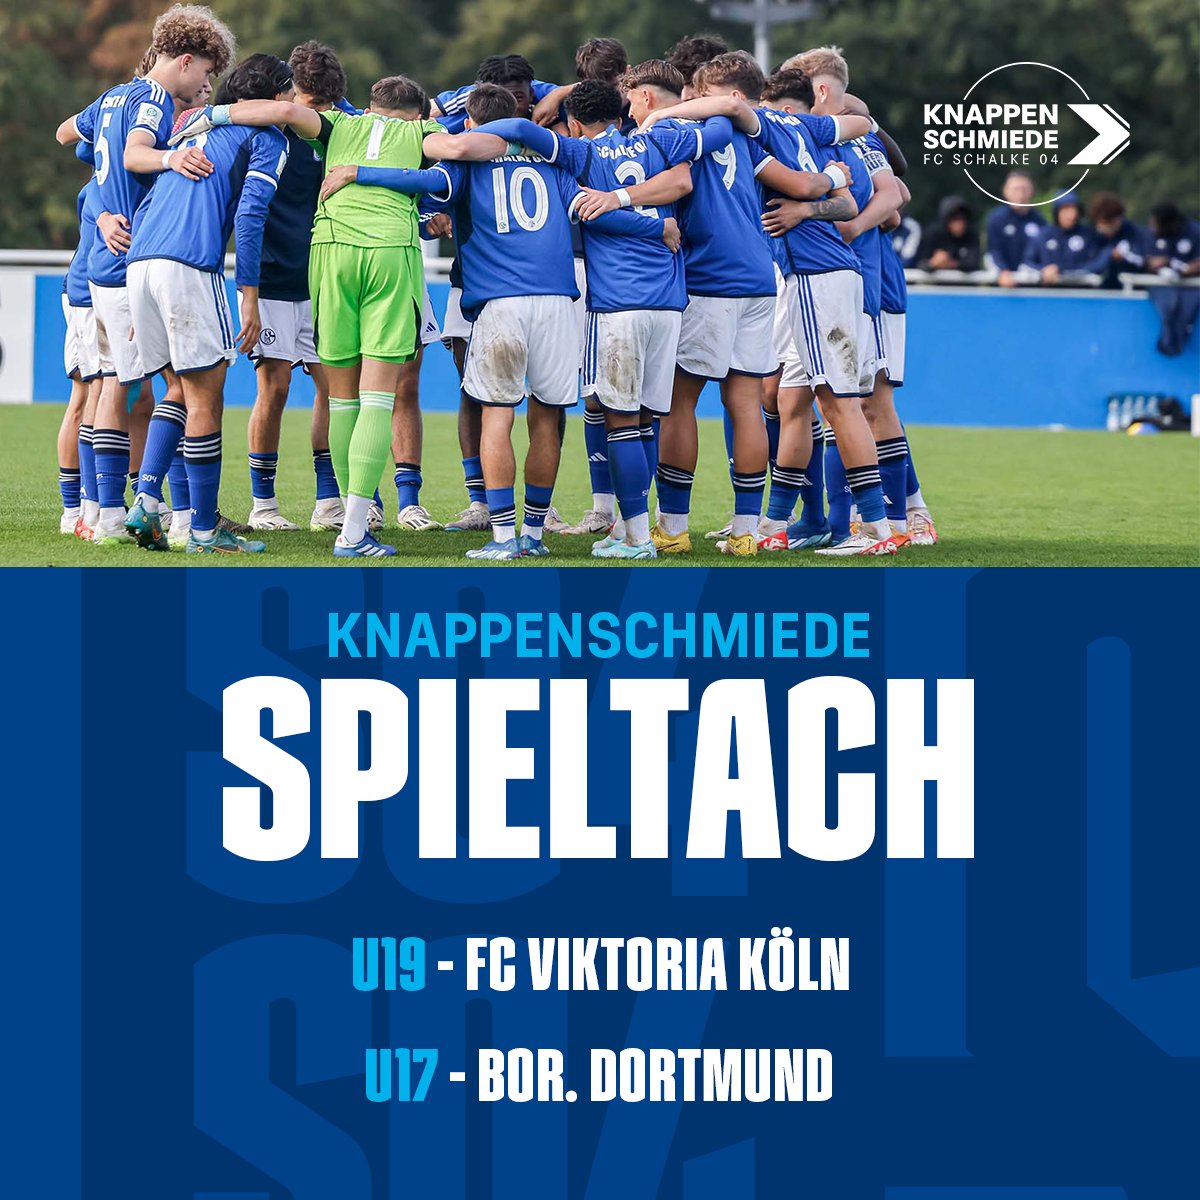 FC Schalke 04 on X